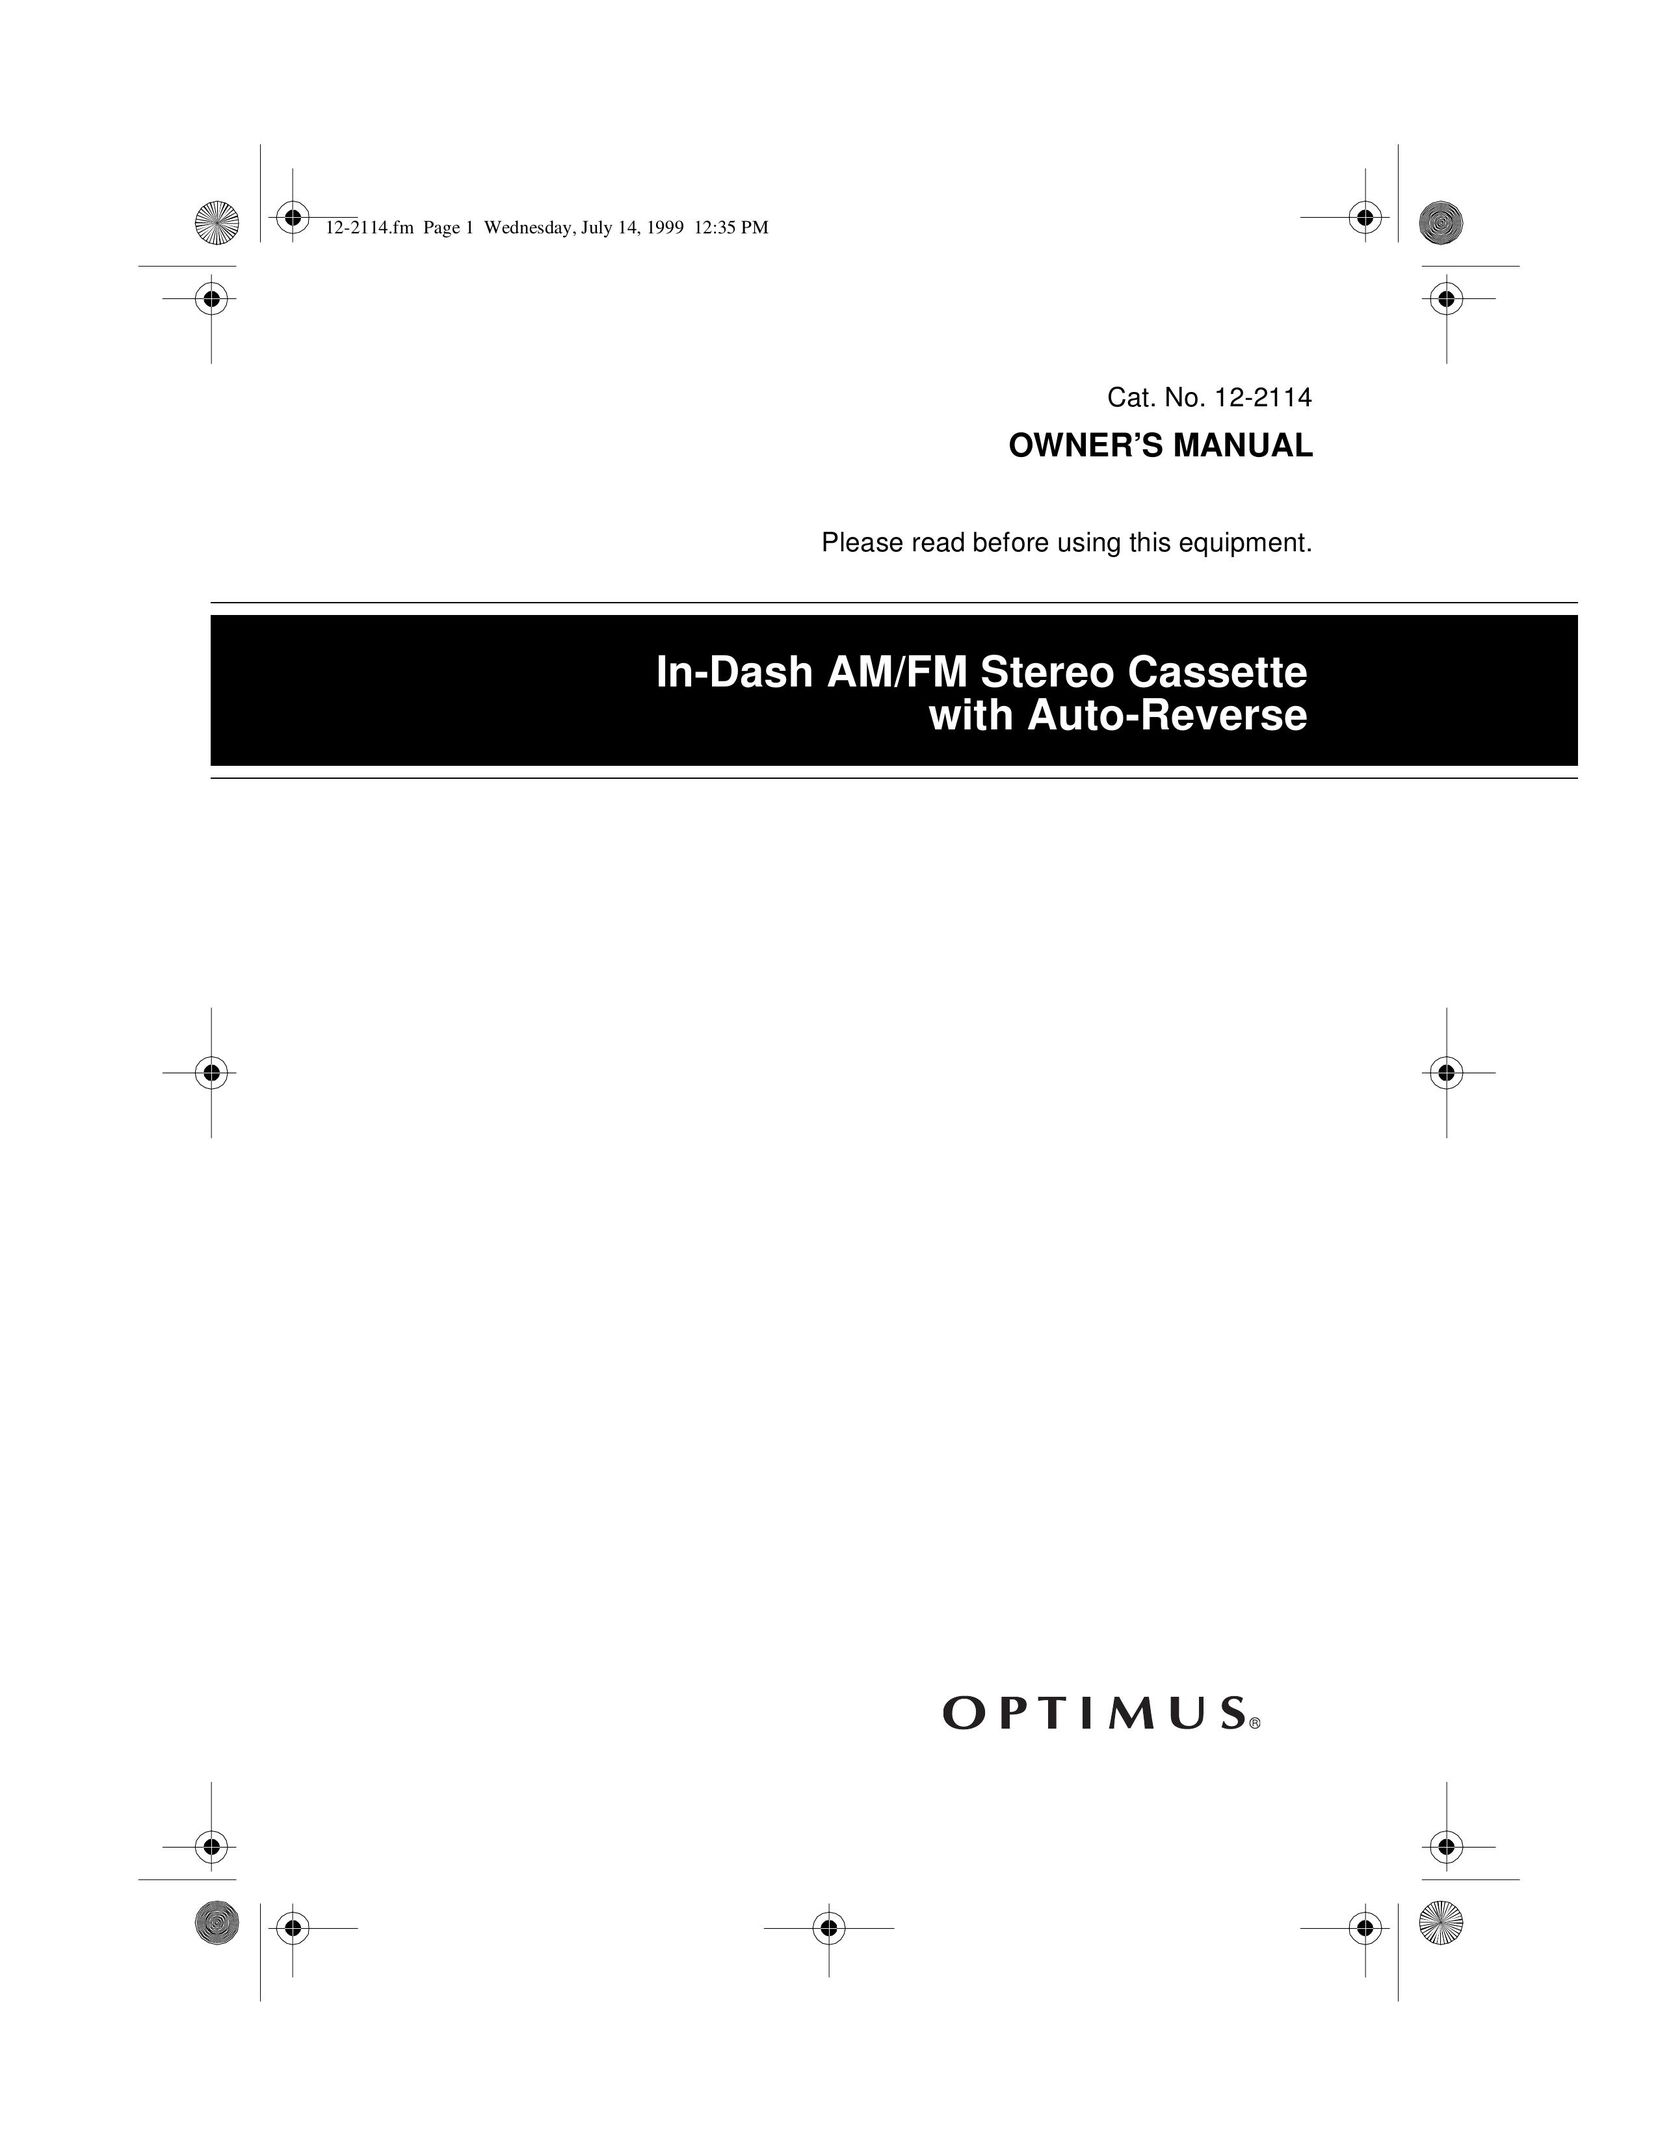 Optimus 12-2114 Cassette Player User Manual